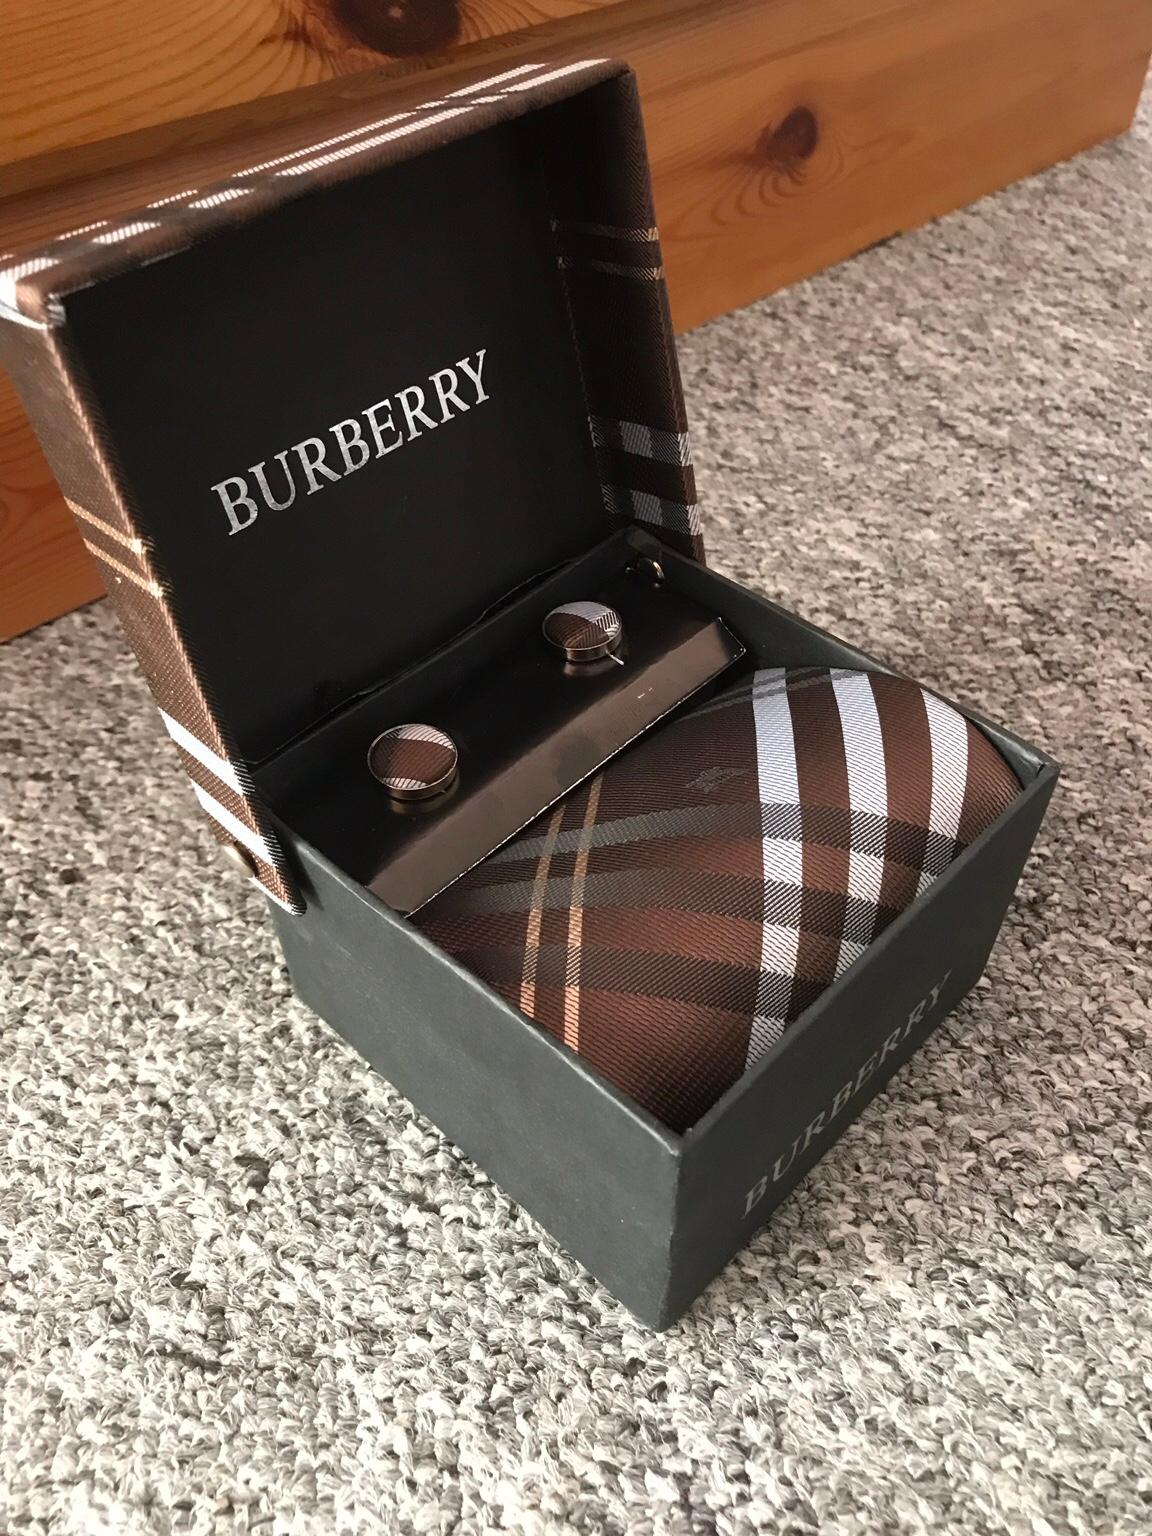 burberry tie and pocket square set